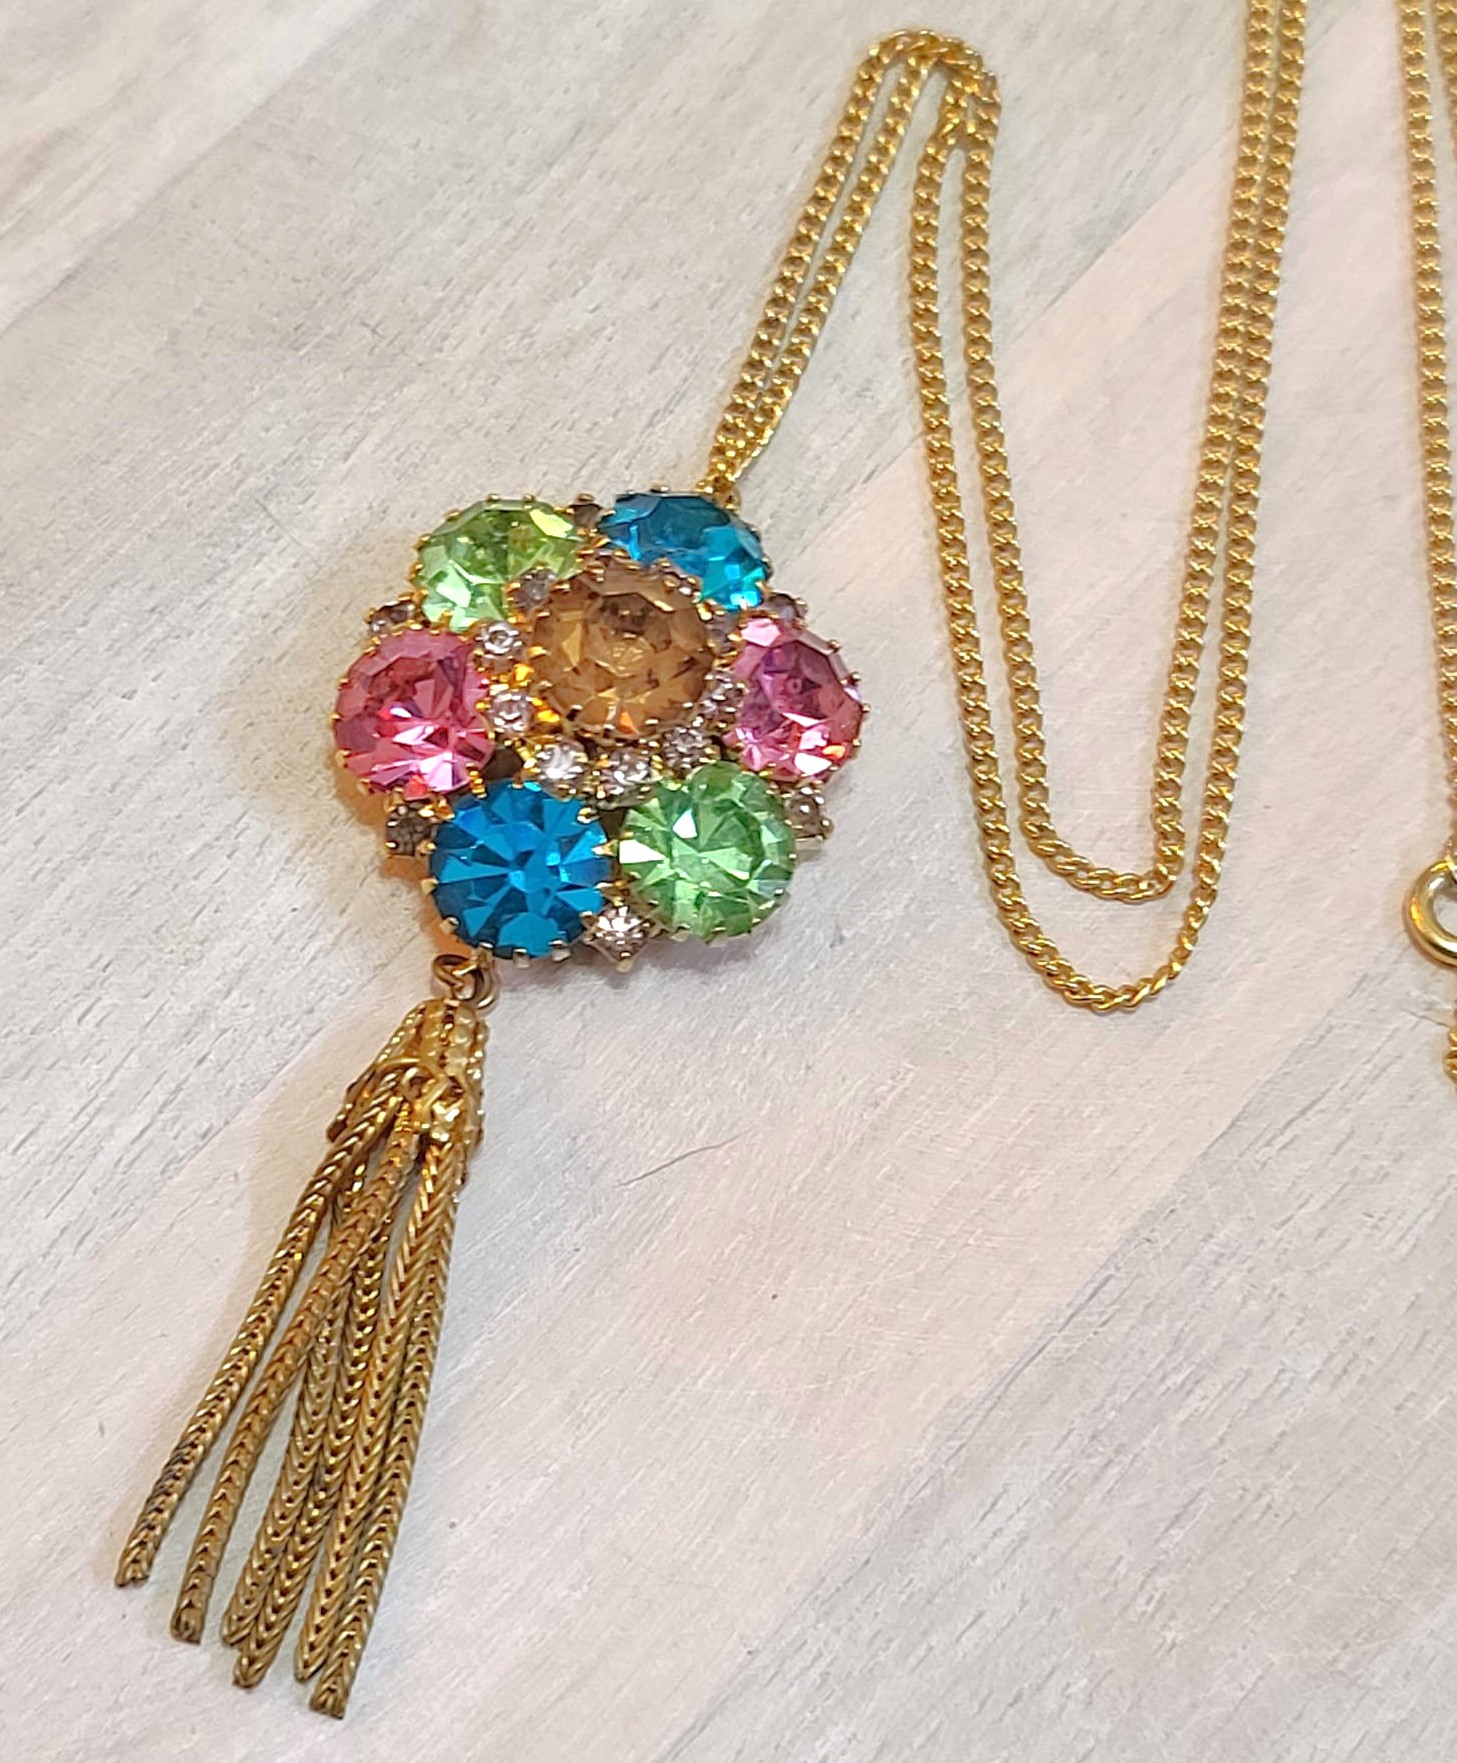 Rhinestone pendant lariat, vintage necklac, multi color rhinestones, with tassel